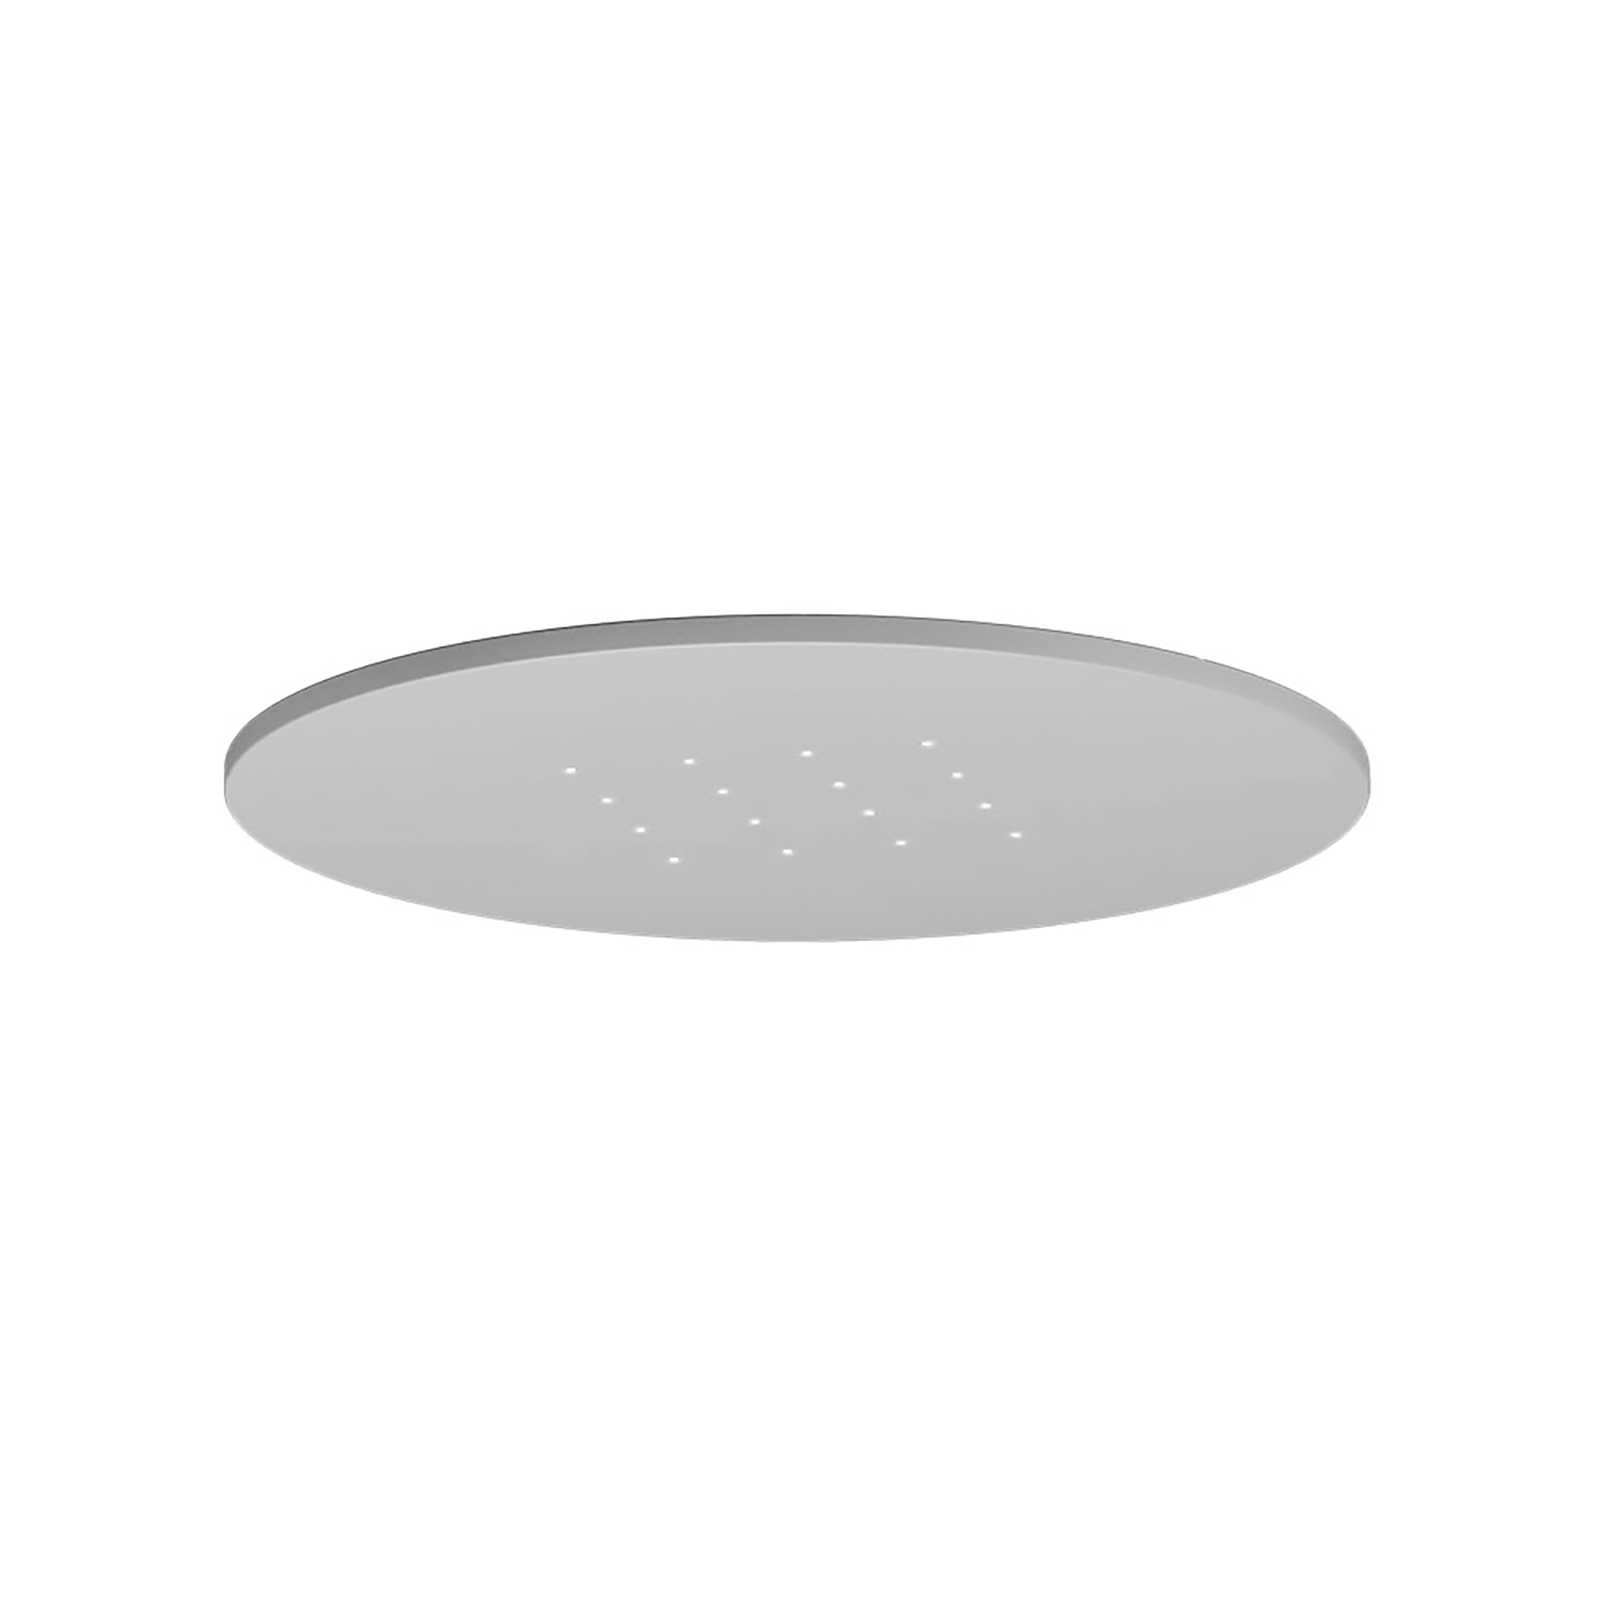 LEDWORKS Sono-LED Round 16 plafond 930 38° wit